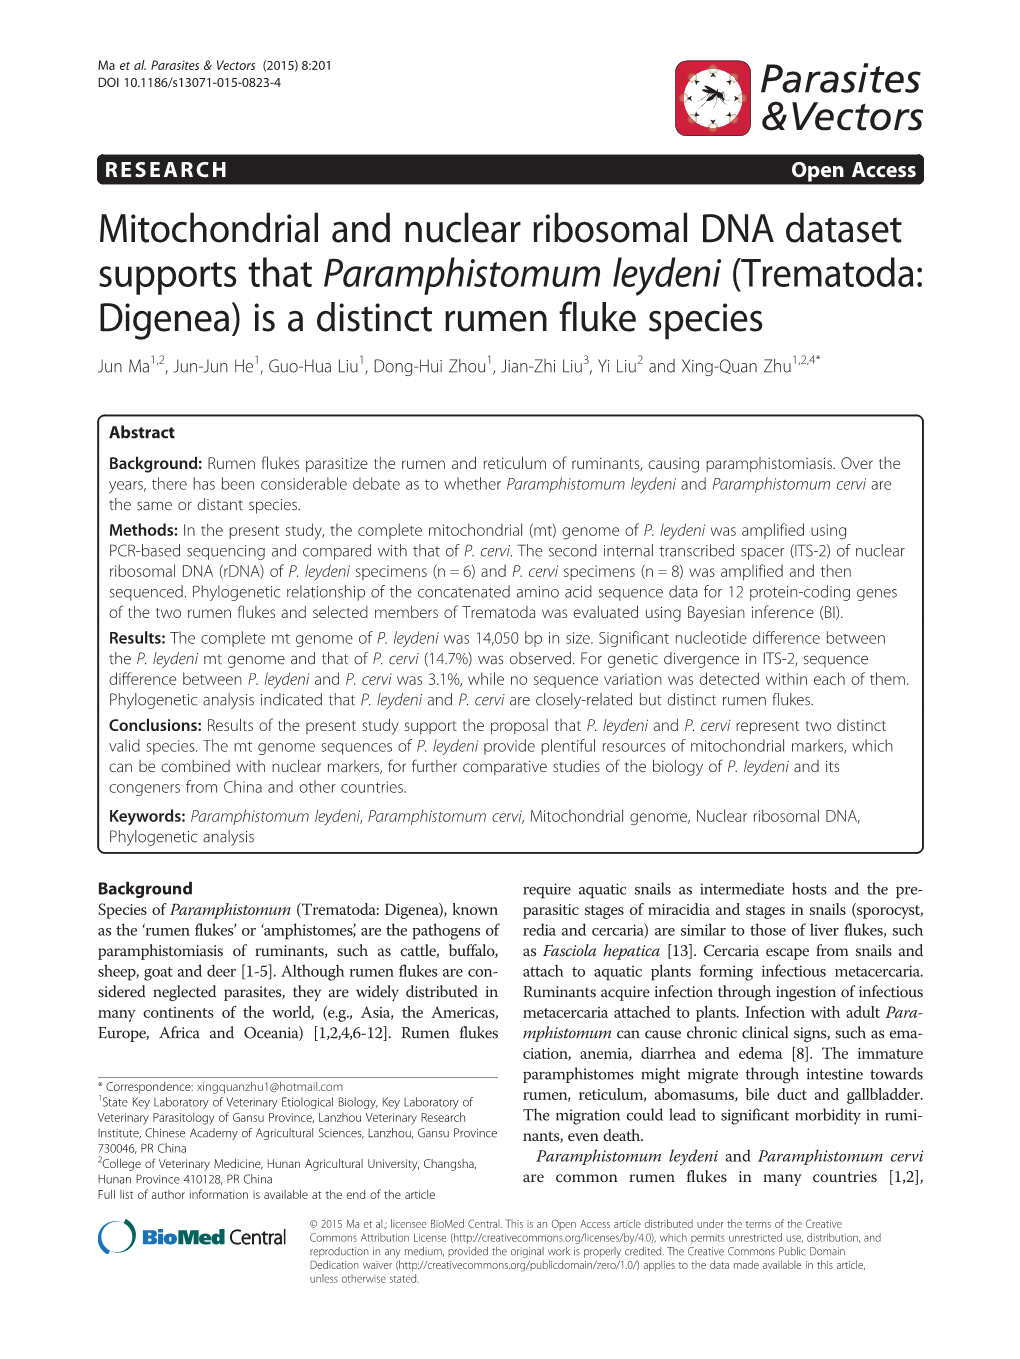 Mitochondrial and Nuclear Ribosomal DNA Dataset Supports That Paramphistomum Leydeni (Trematoda: Digenea) Is a Distinct Rumen Fl